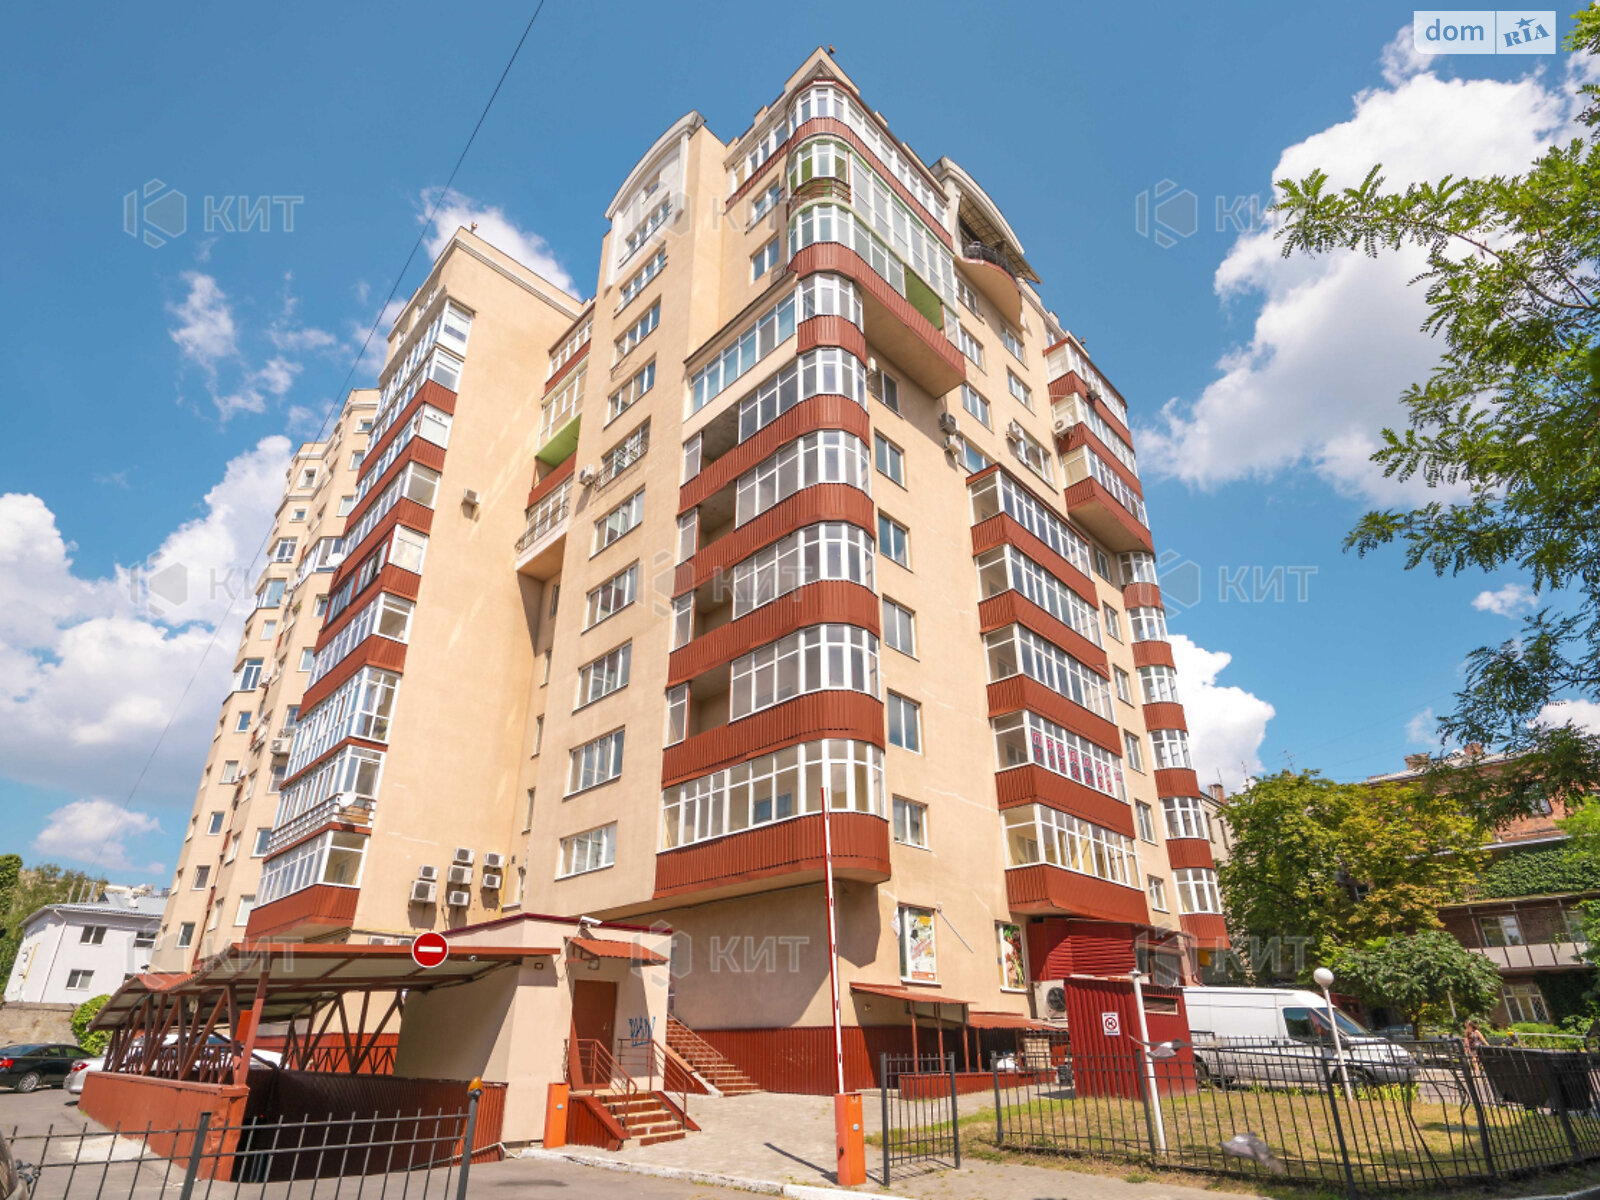 Продажа двухкомнатной квартиры в Харькове, на ул. Ярослава Мудрого 30А, район Центр фото 1